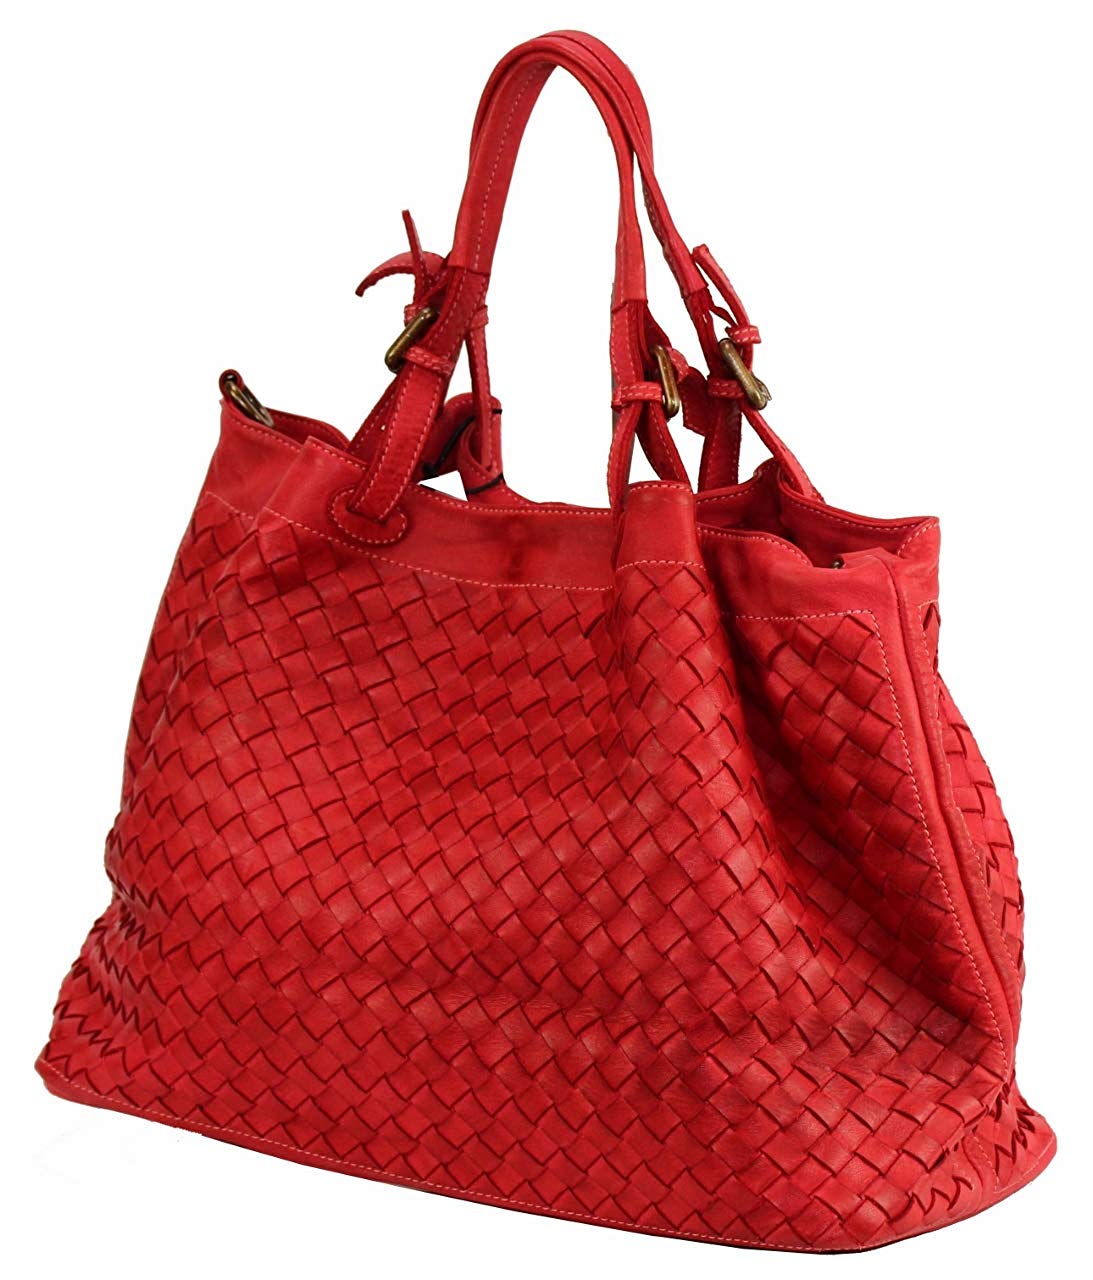 BZNA Rene Bag rosso Rot red Italy Designer geflochten Damen Handtasche Schultertasche Tasche Schafsleder Shopper Neu